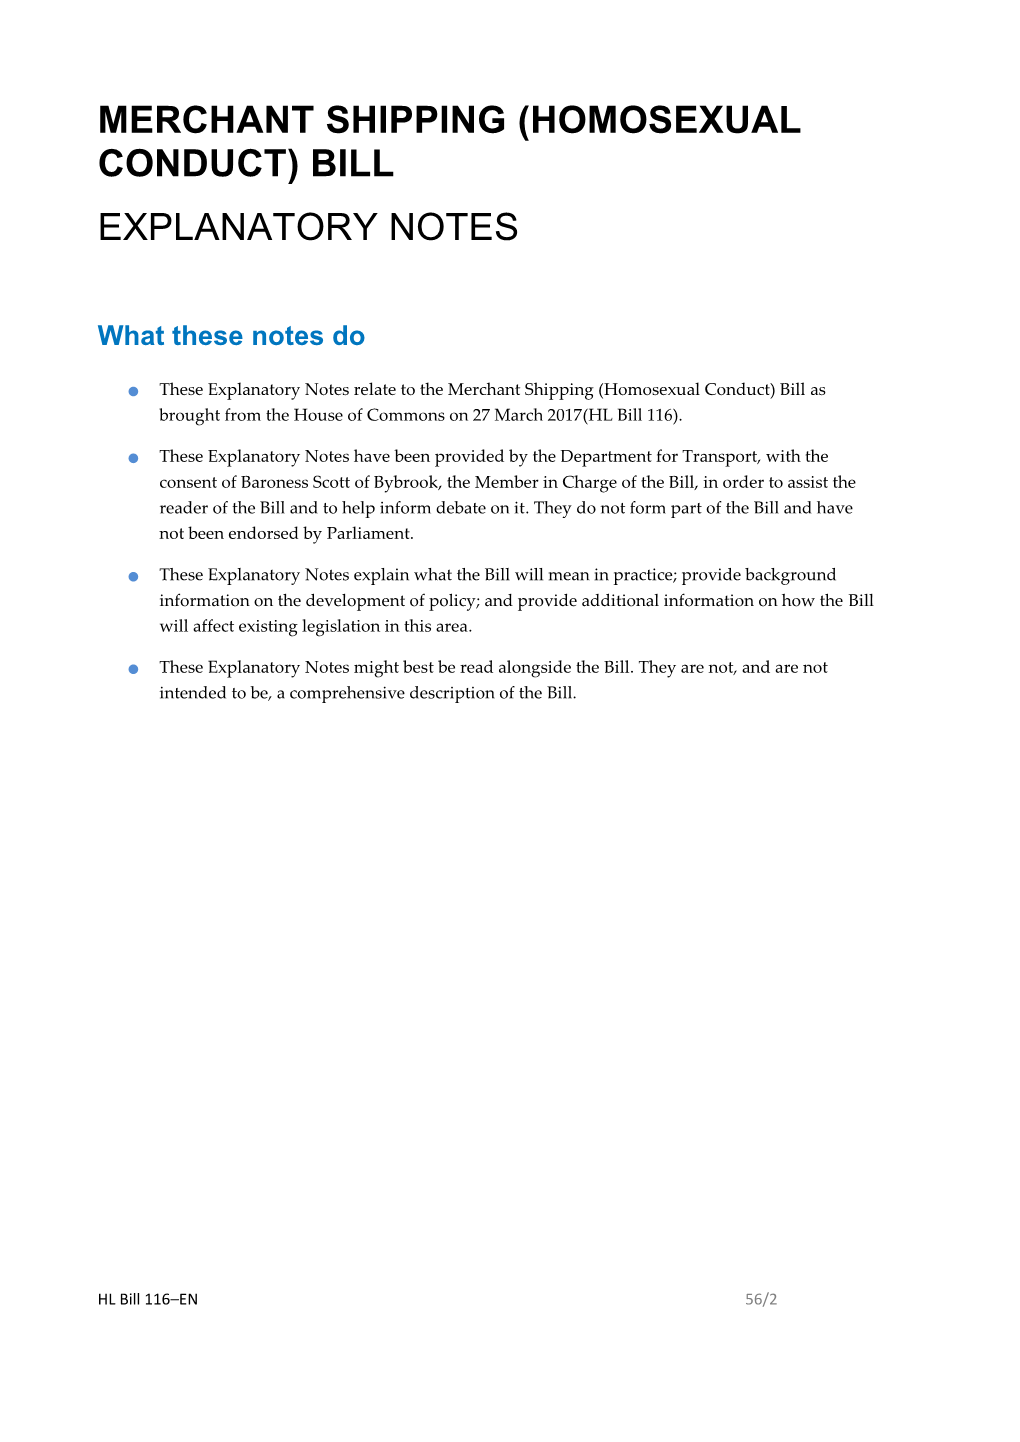 Merchant Shipping (Homosexual Conduct) Bill Explanatory Notes